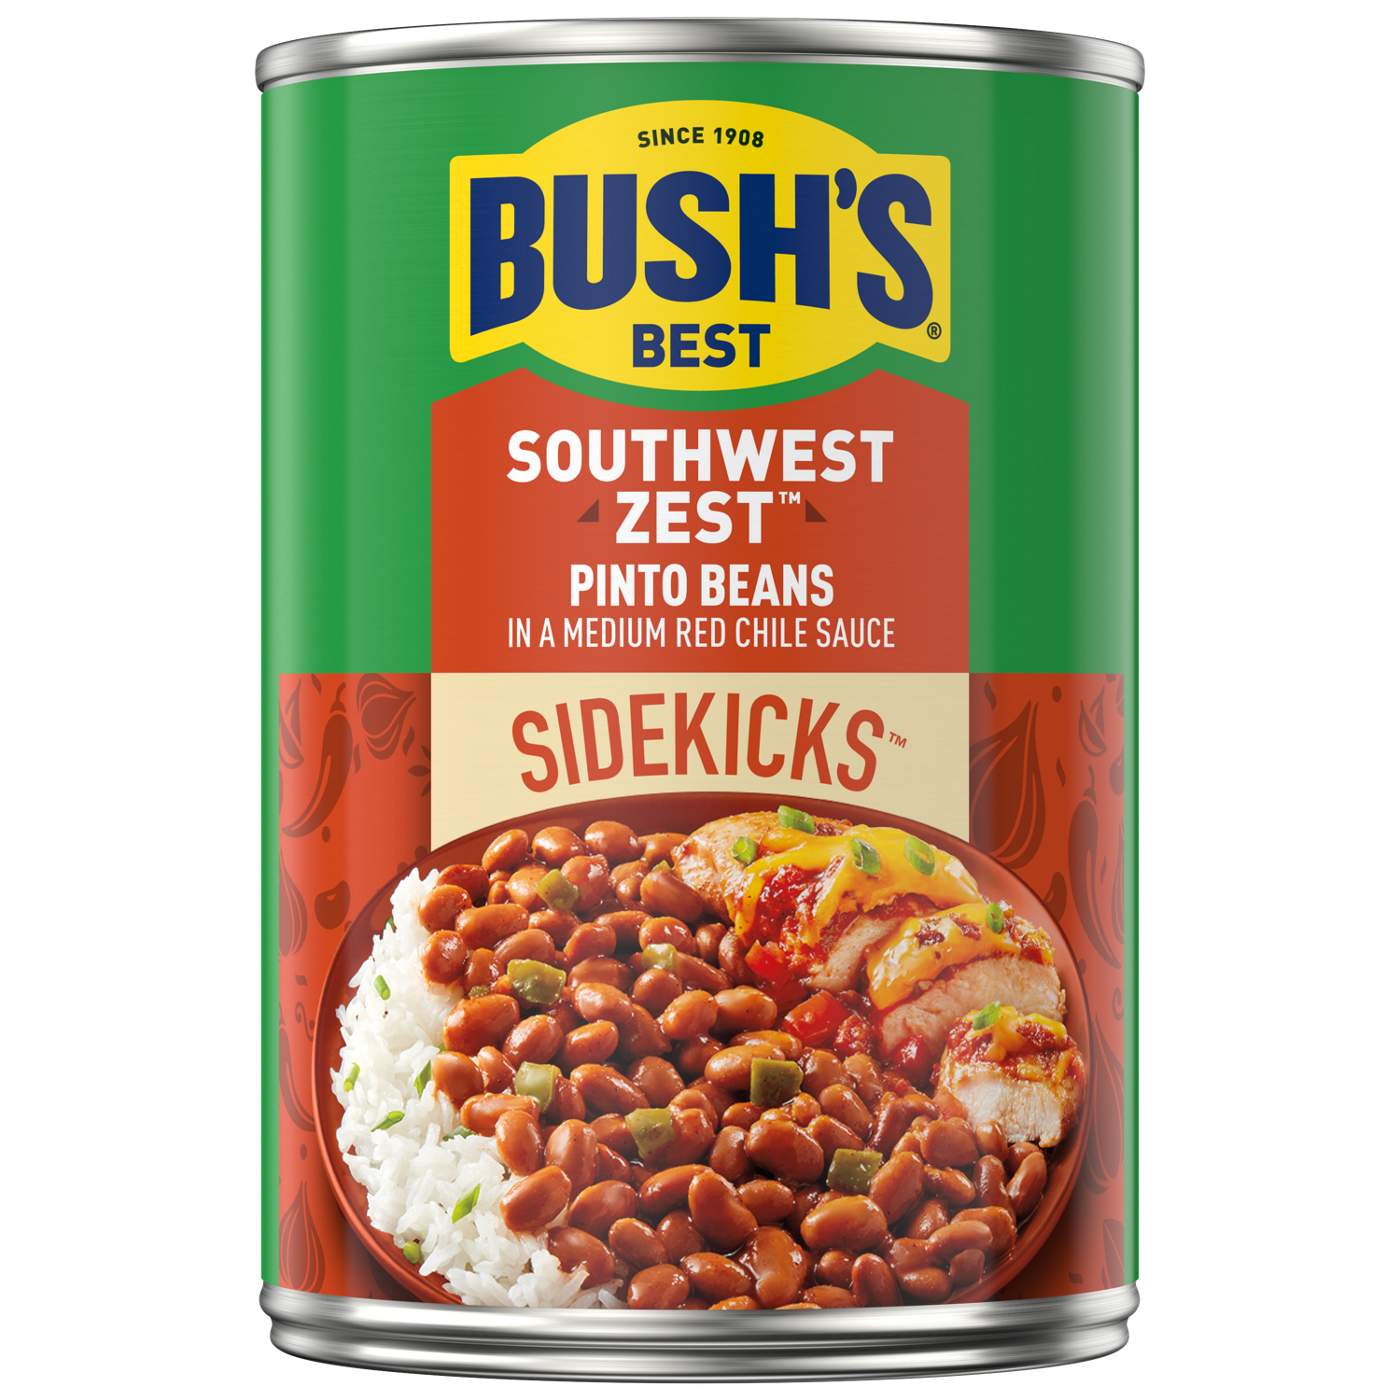 Bush's Best Sidekicks Southwest Zest Pinto Beans; image 1 of 4